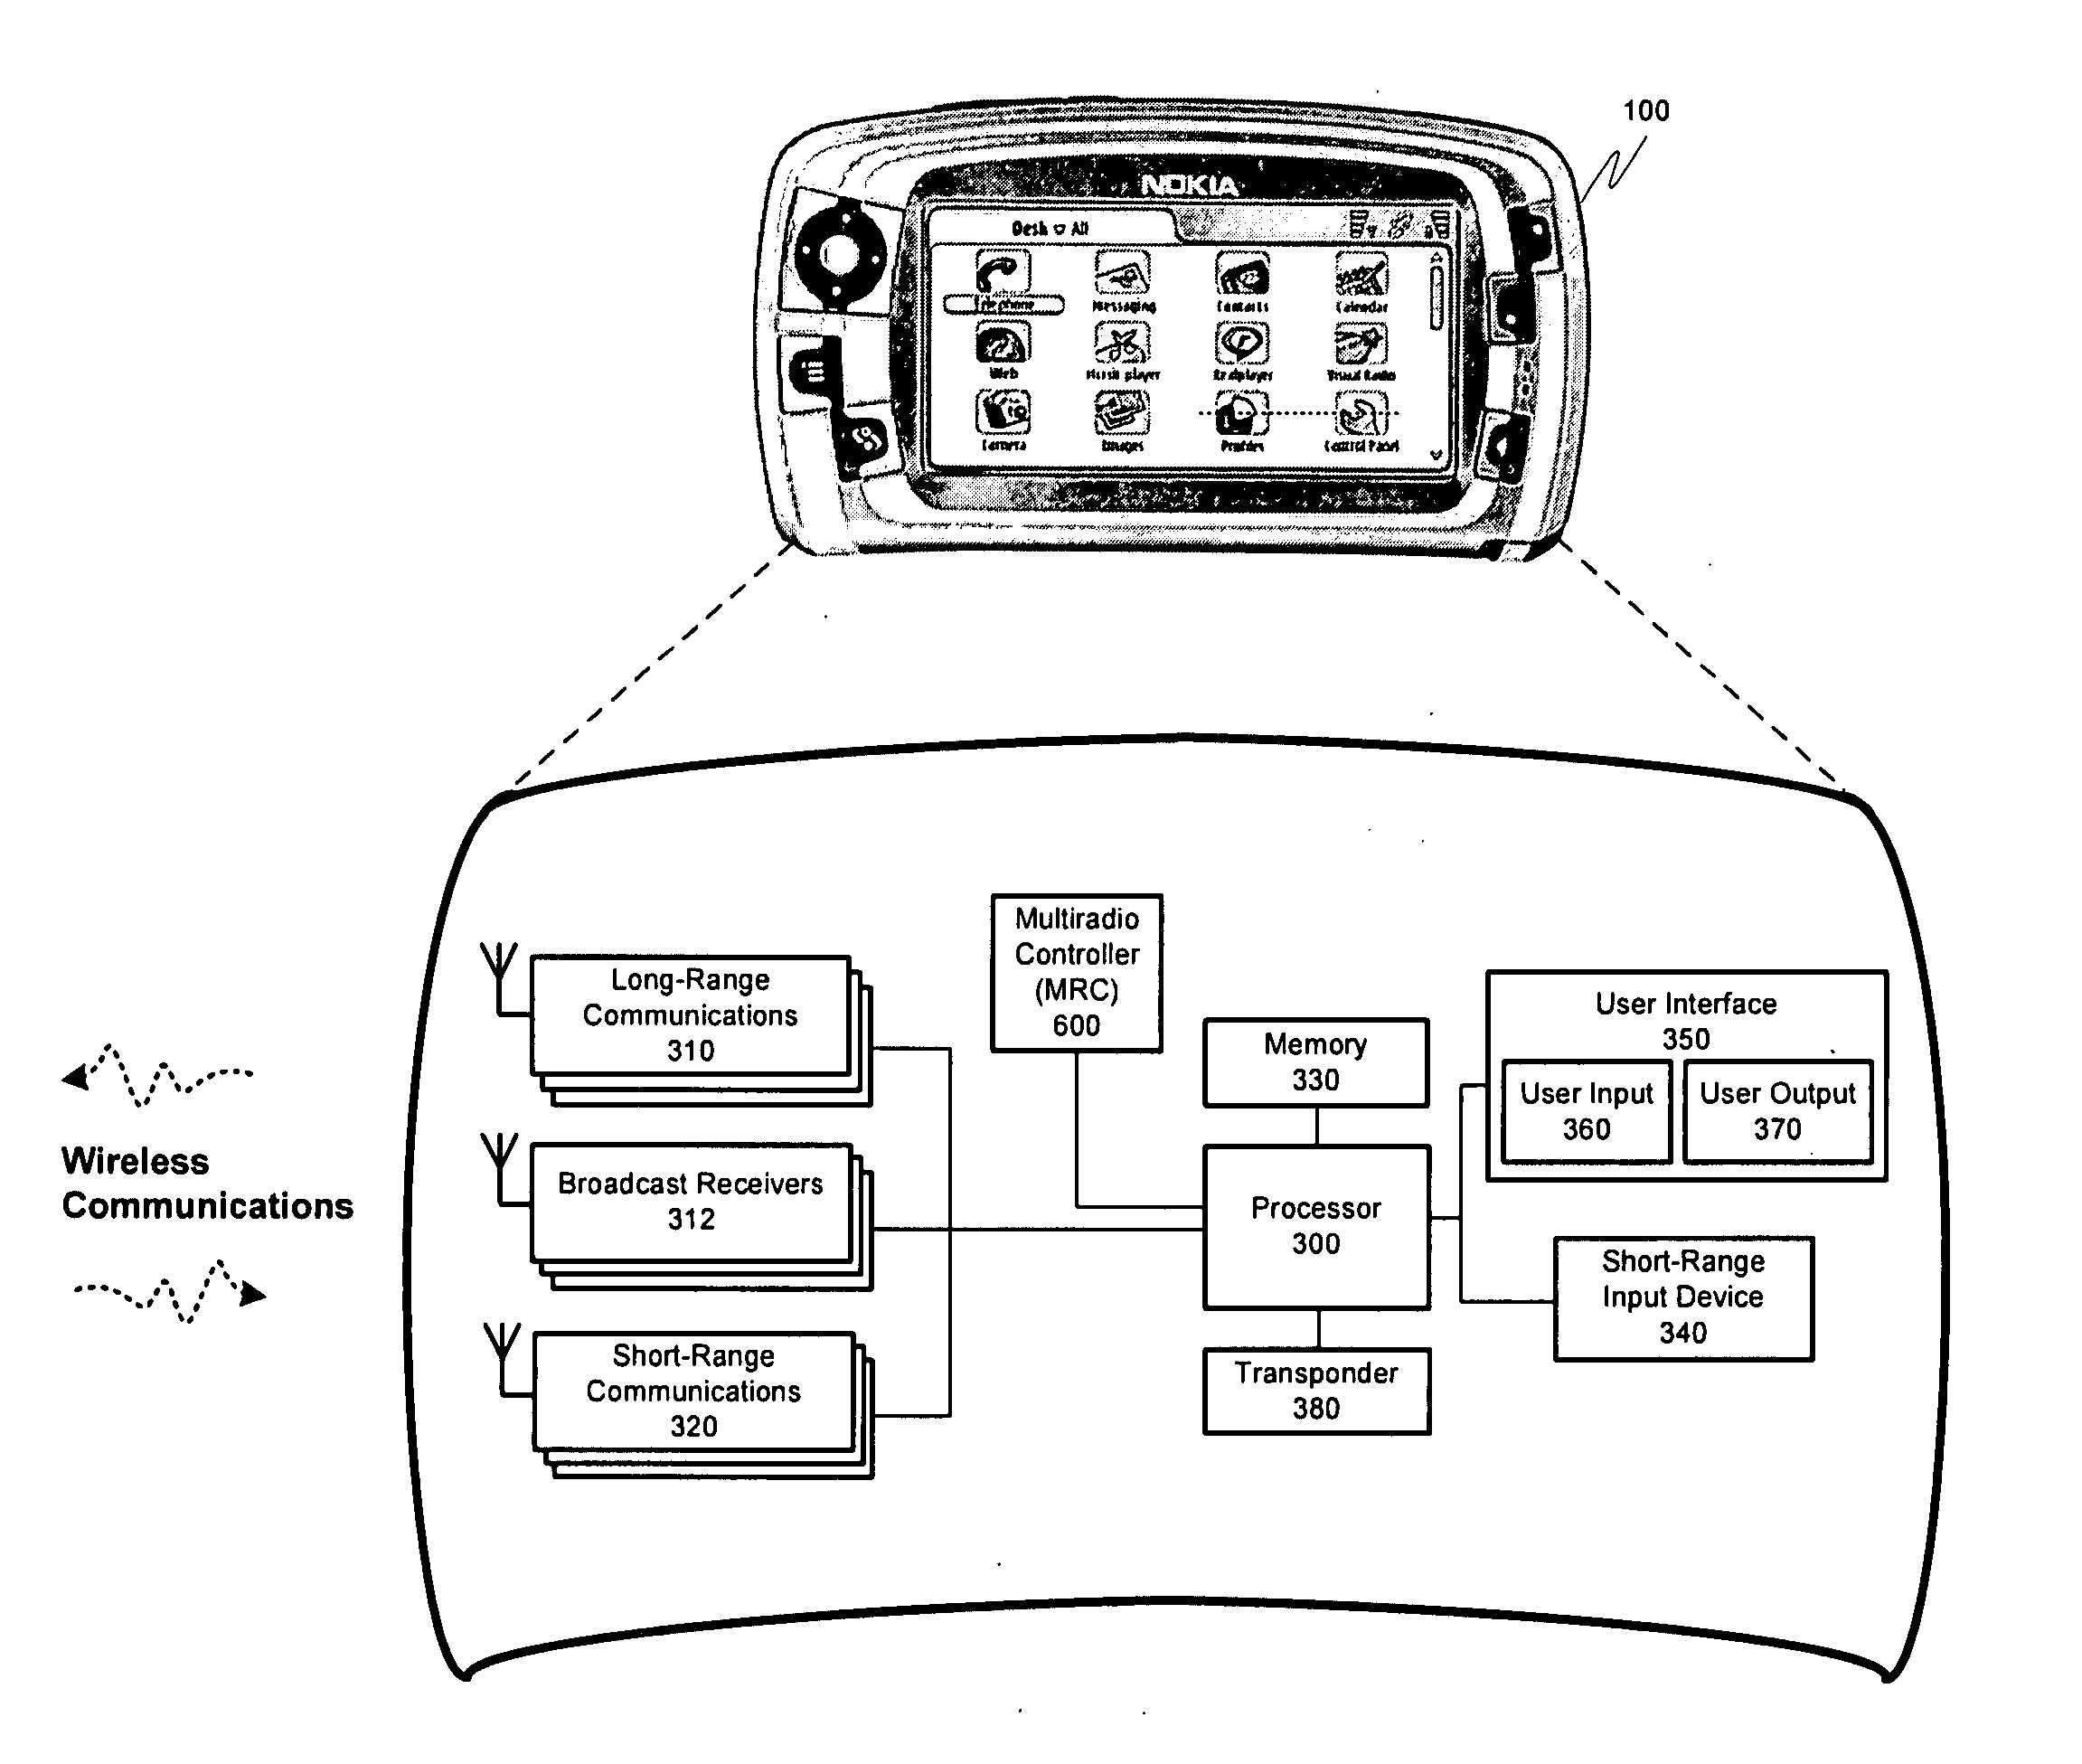 Multiradio control interface element in modem